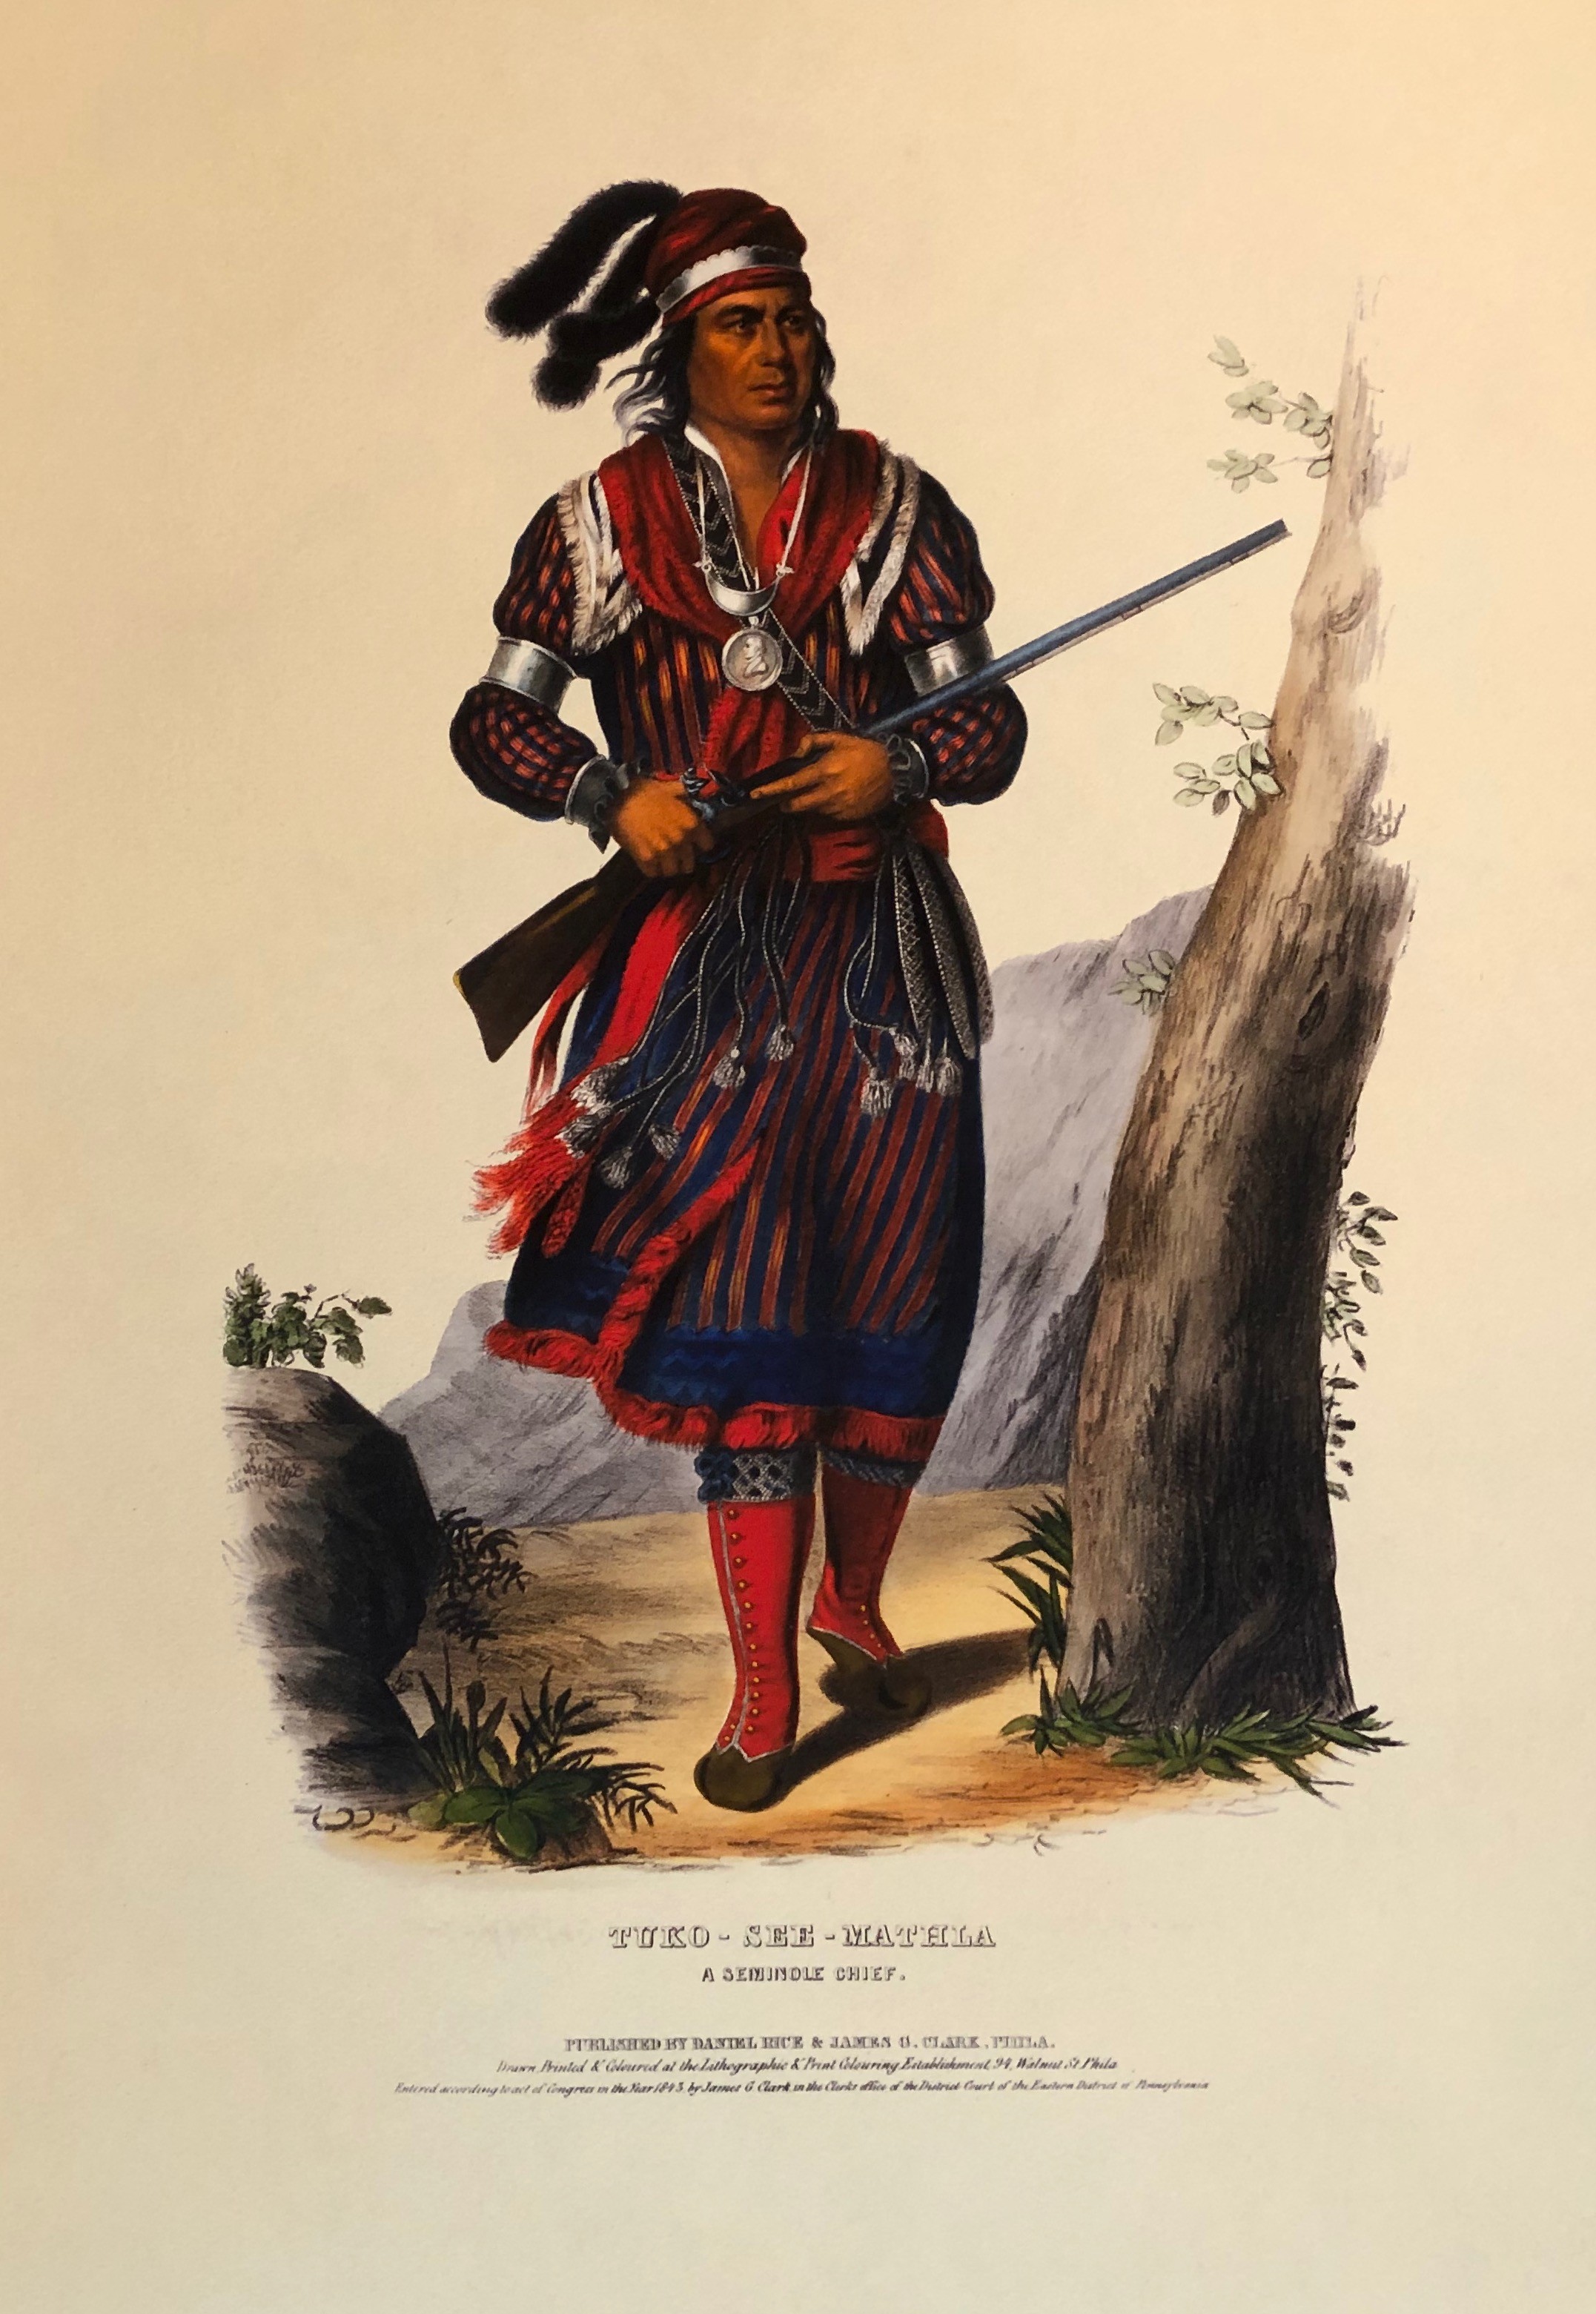 Tuko-See-Mathla, A Seminole